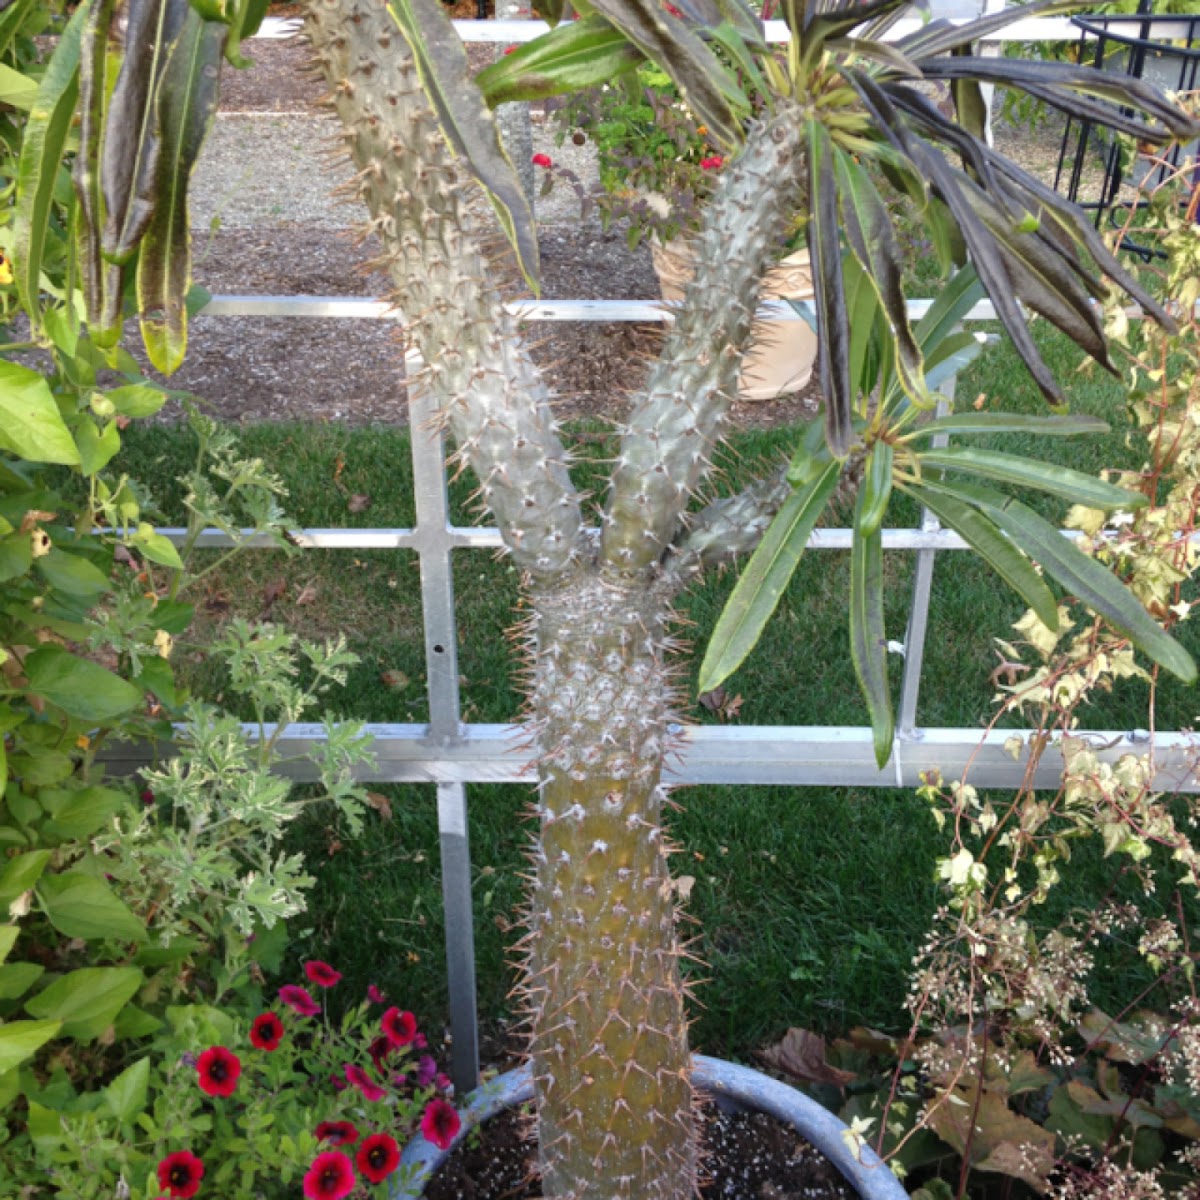 Madagascar Palm